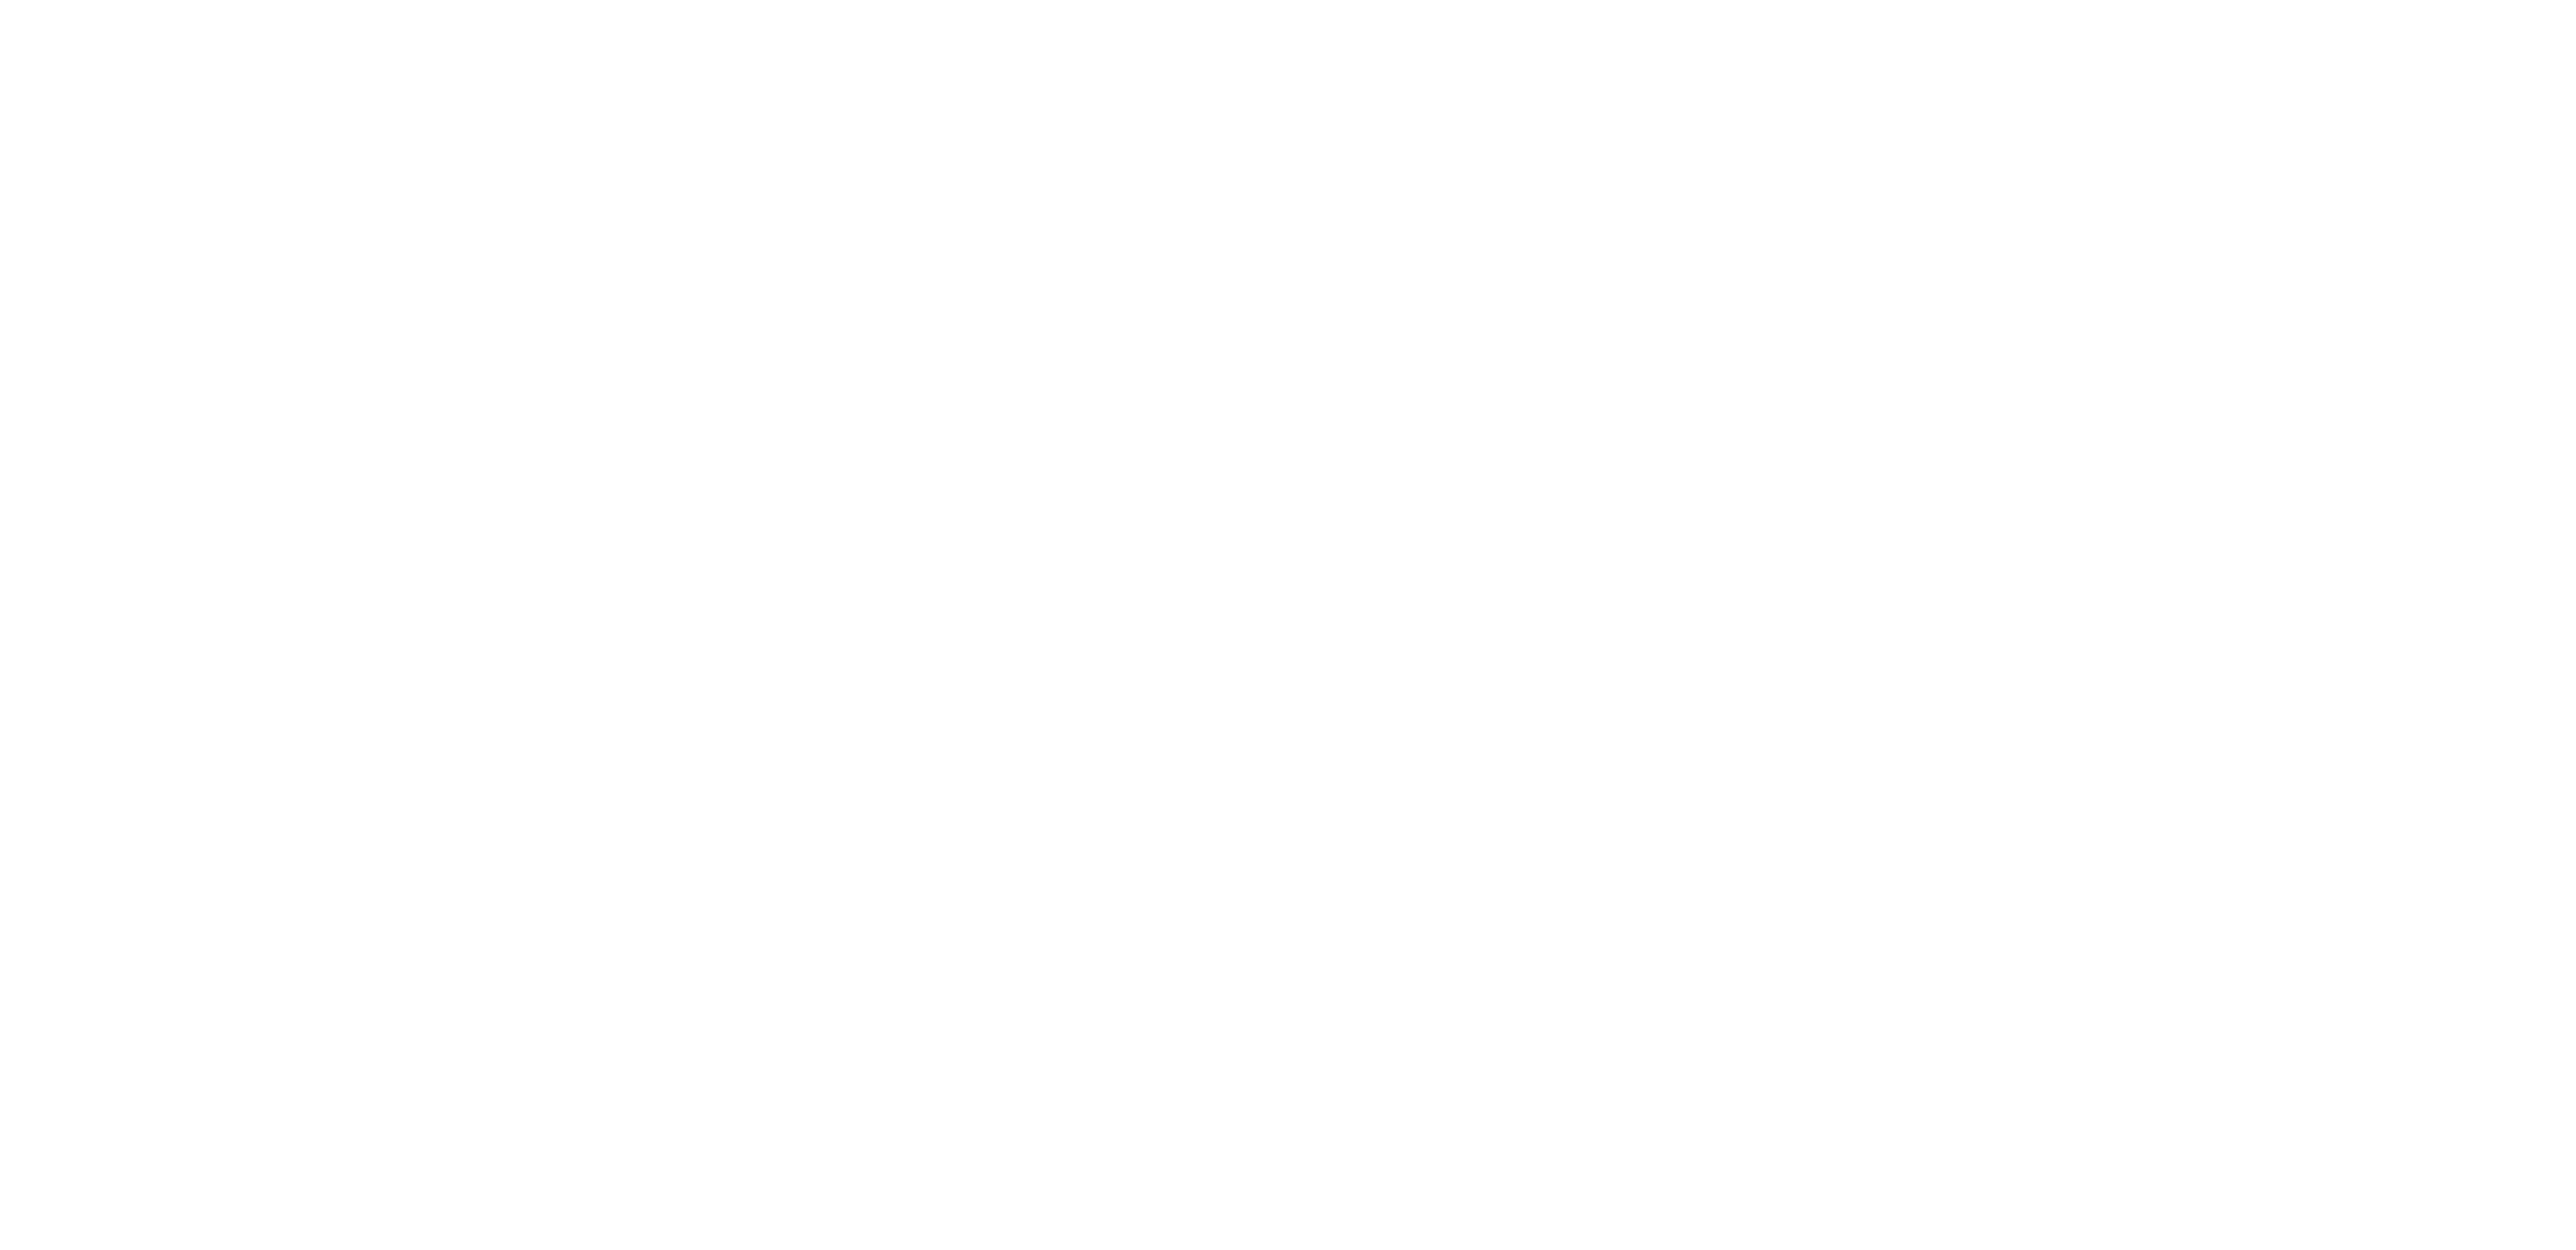 nspcss helpline logo